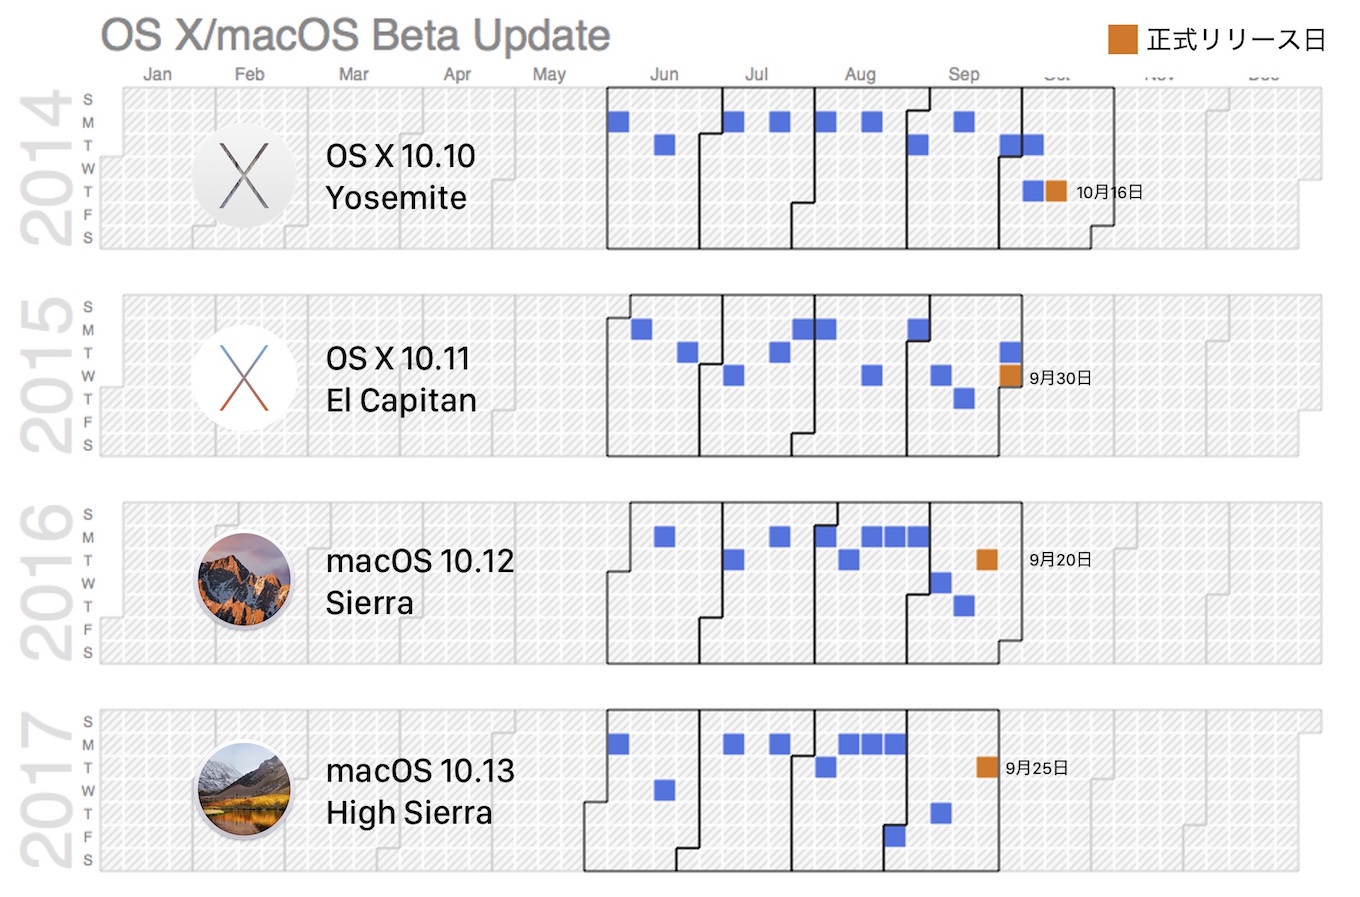 macOS 10.13 High Sierraのリリーススケジュール